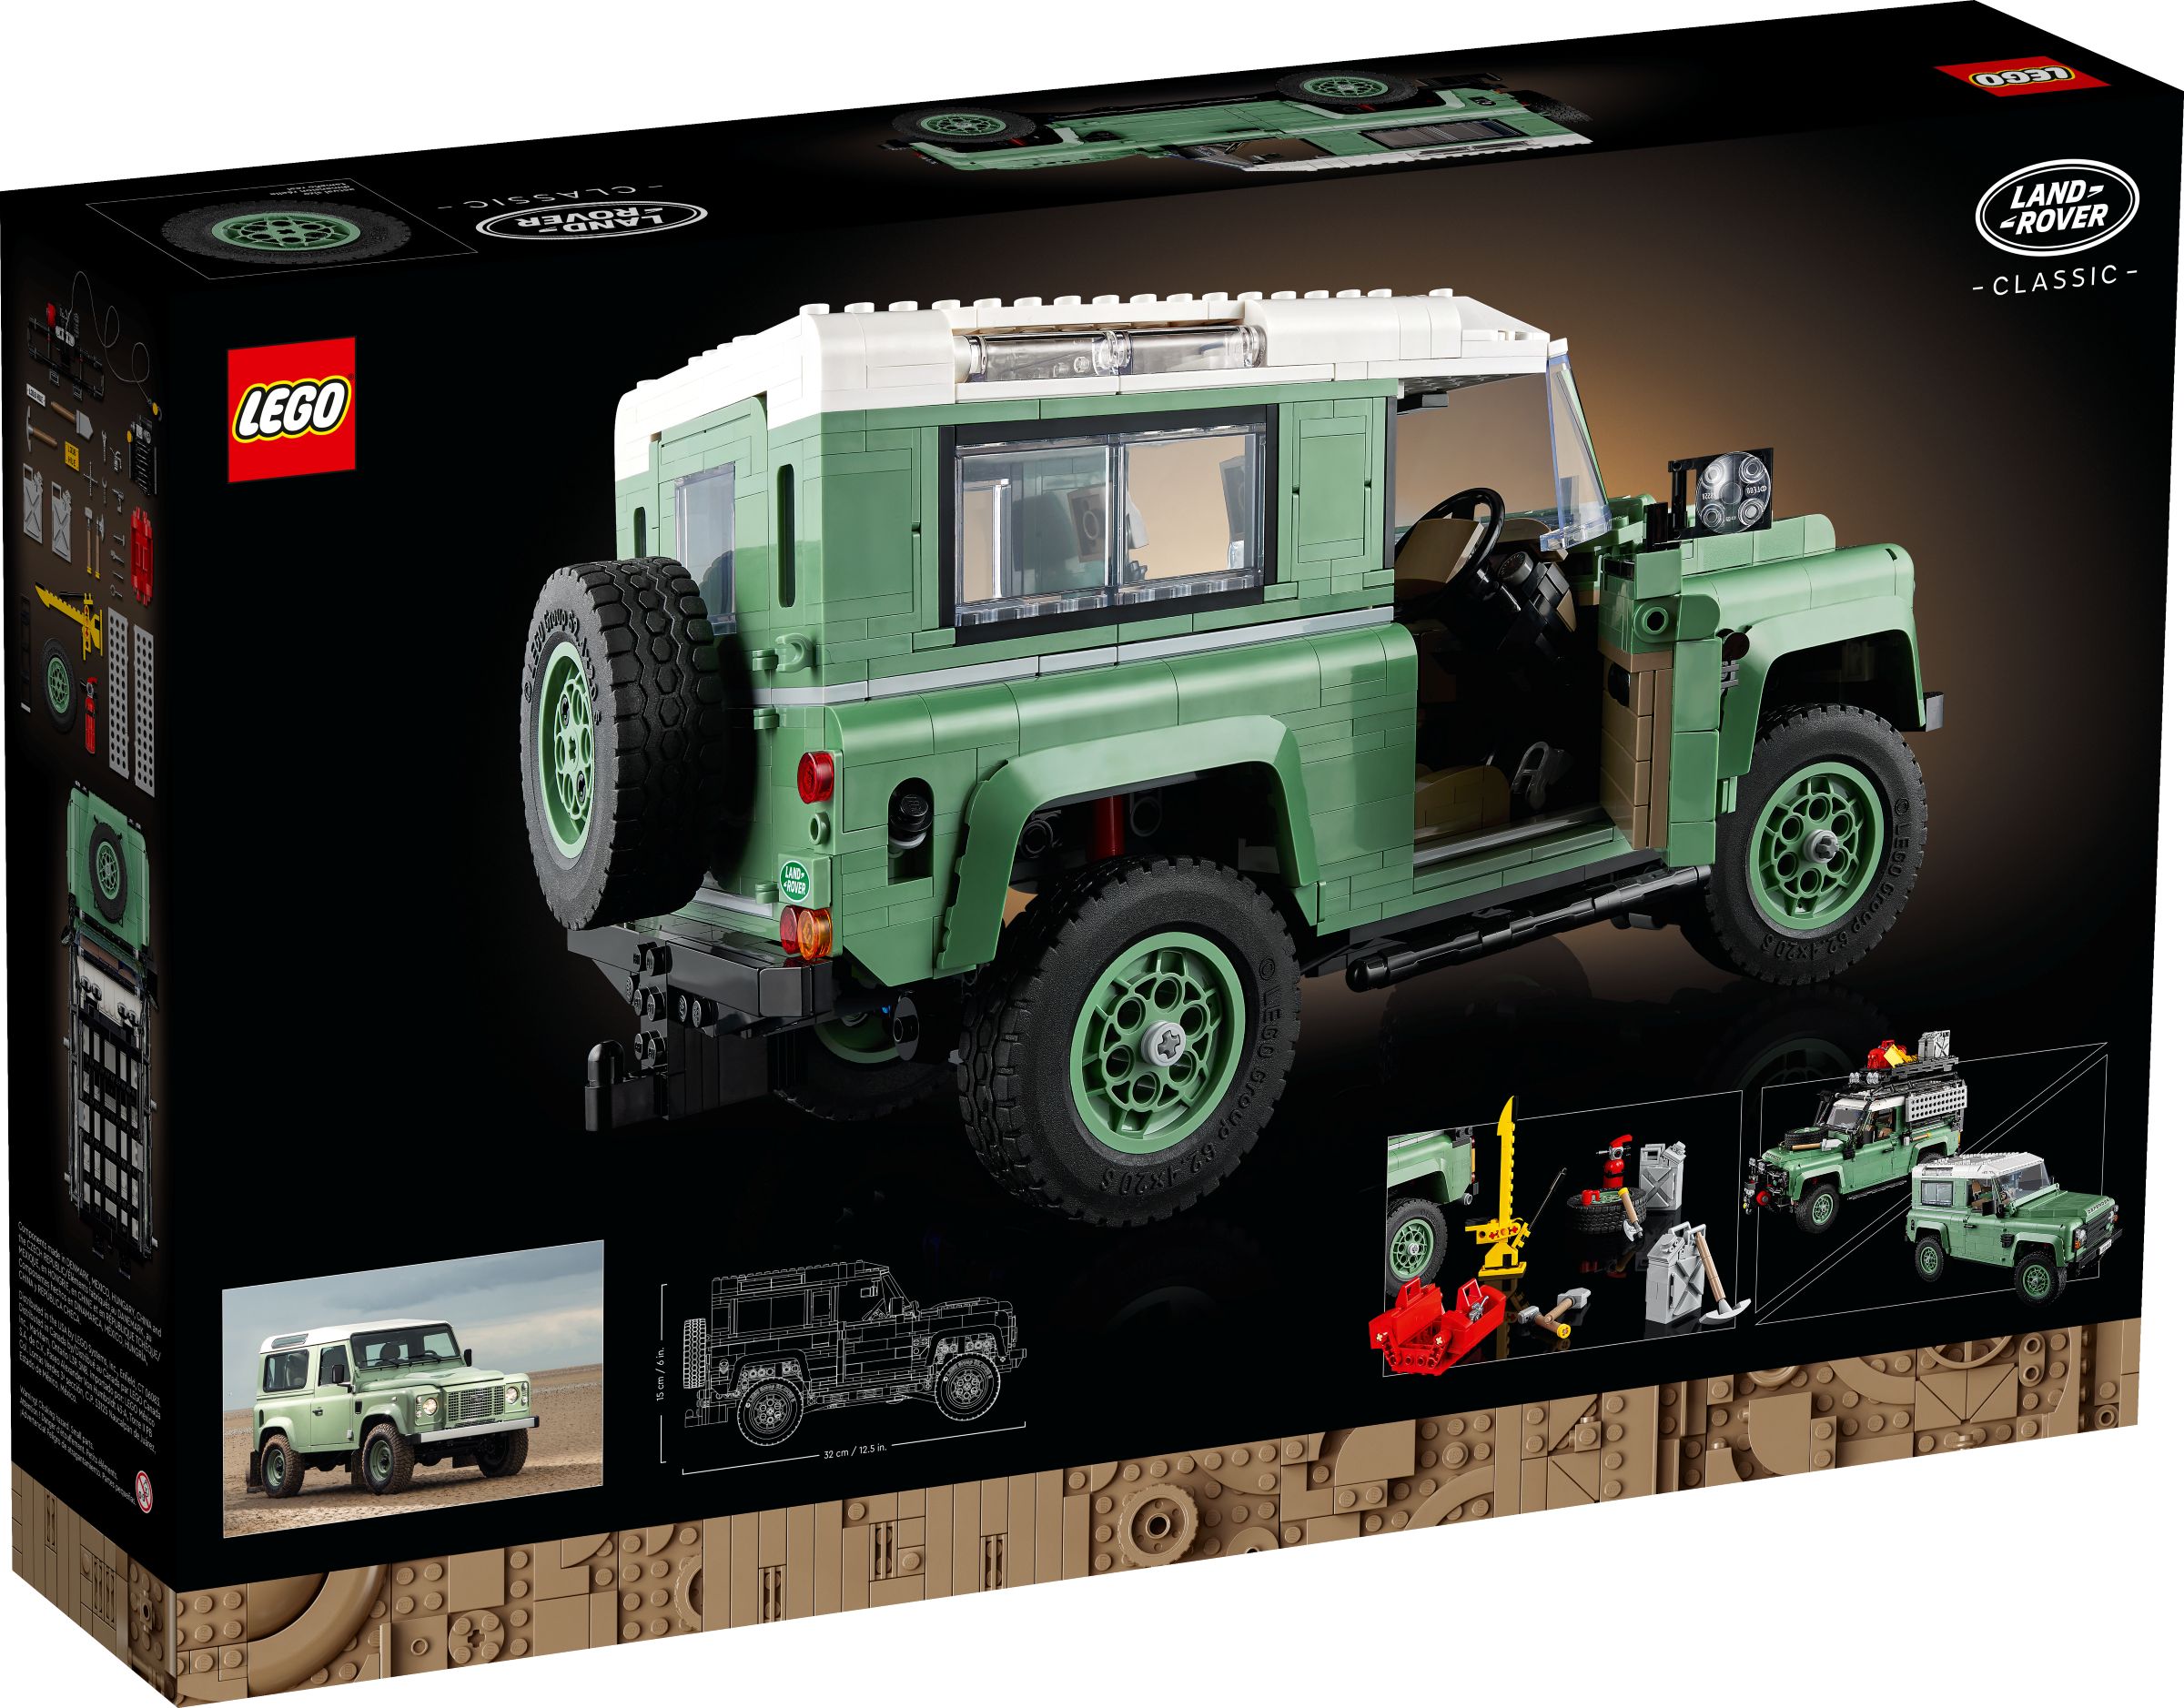 LEGO Advanced Models 10317 Land Rover Classic Defender 90 LEGO_10317_alt8.jpg